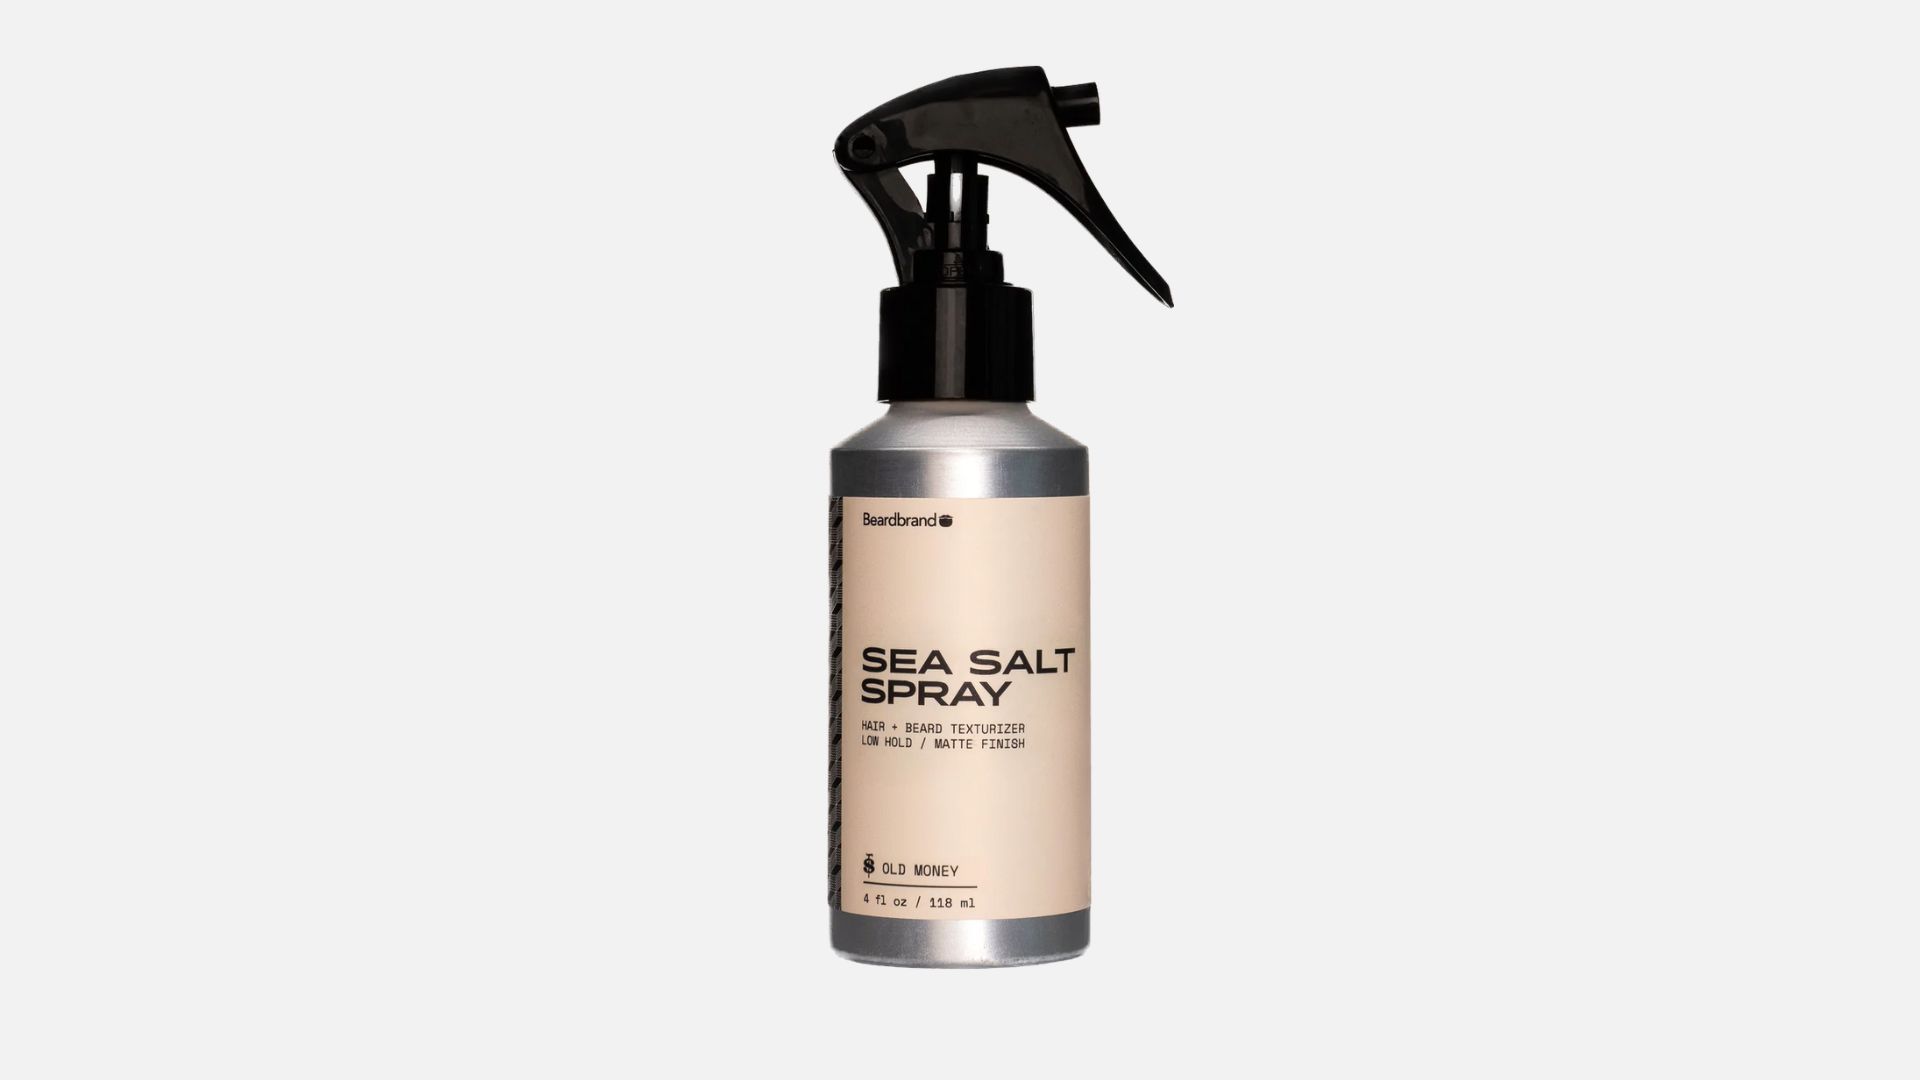 Beardbrand Sea Salt Spray